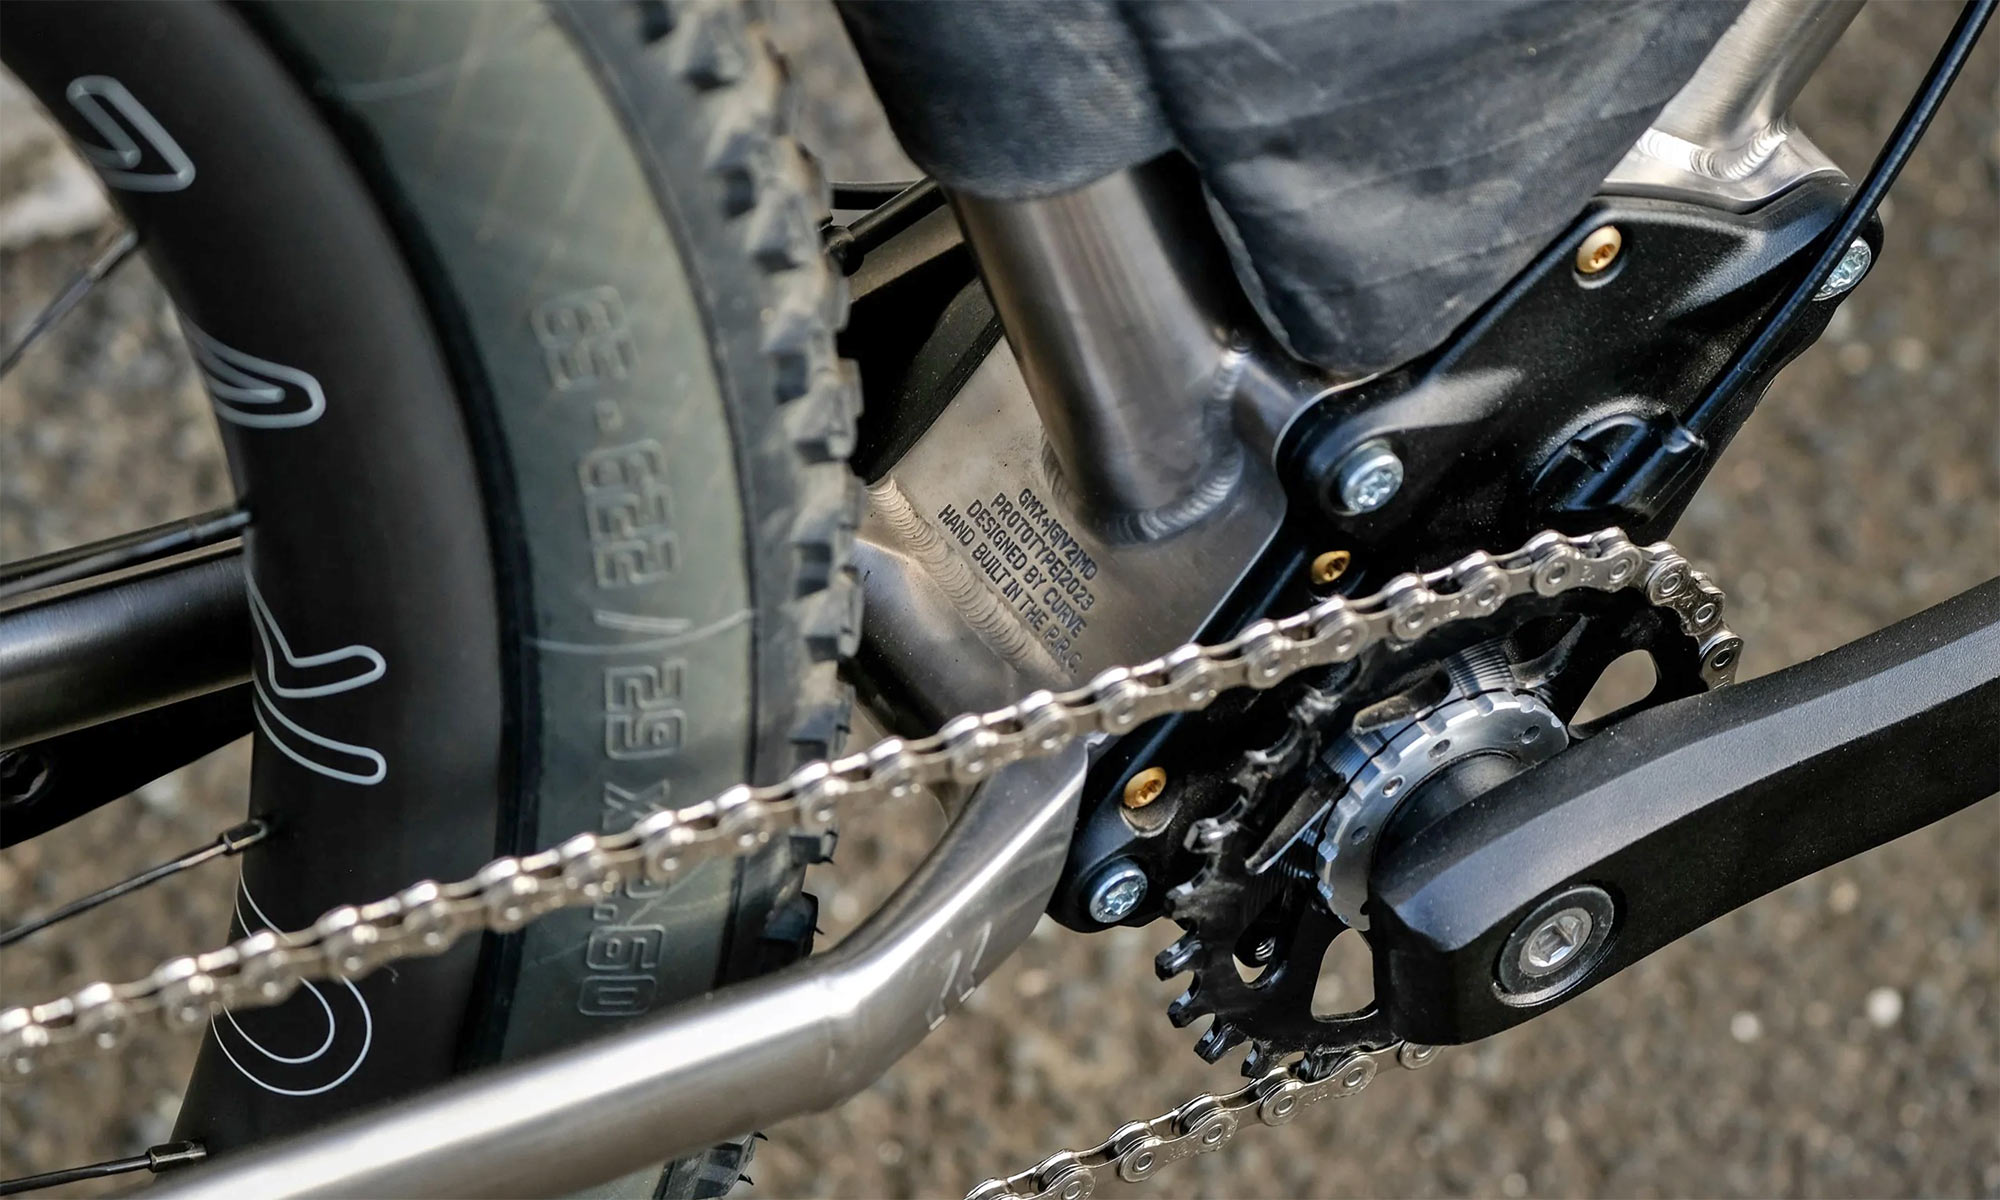 Curve GMX+ Gearbox v2 adventure bikepacking concept bike, Effigear Mimic 9-speed gearbox